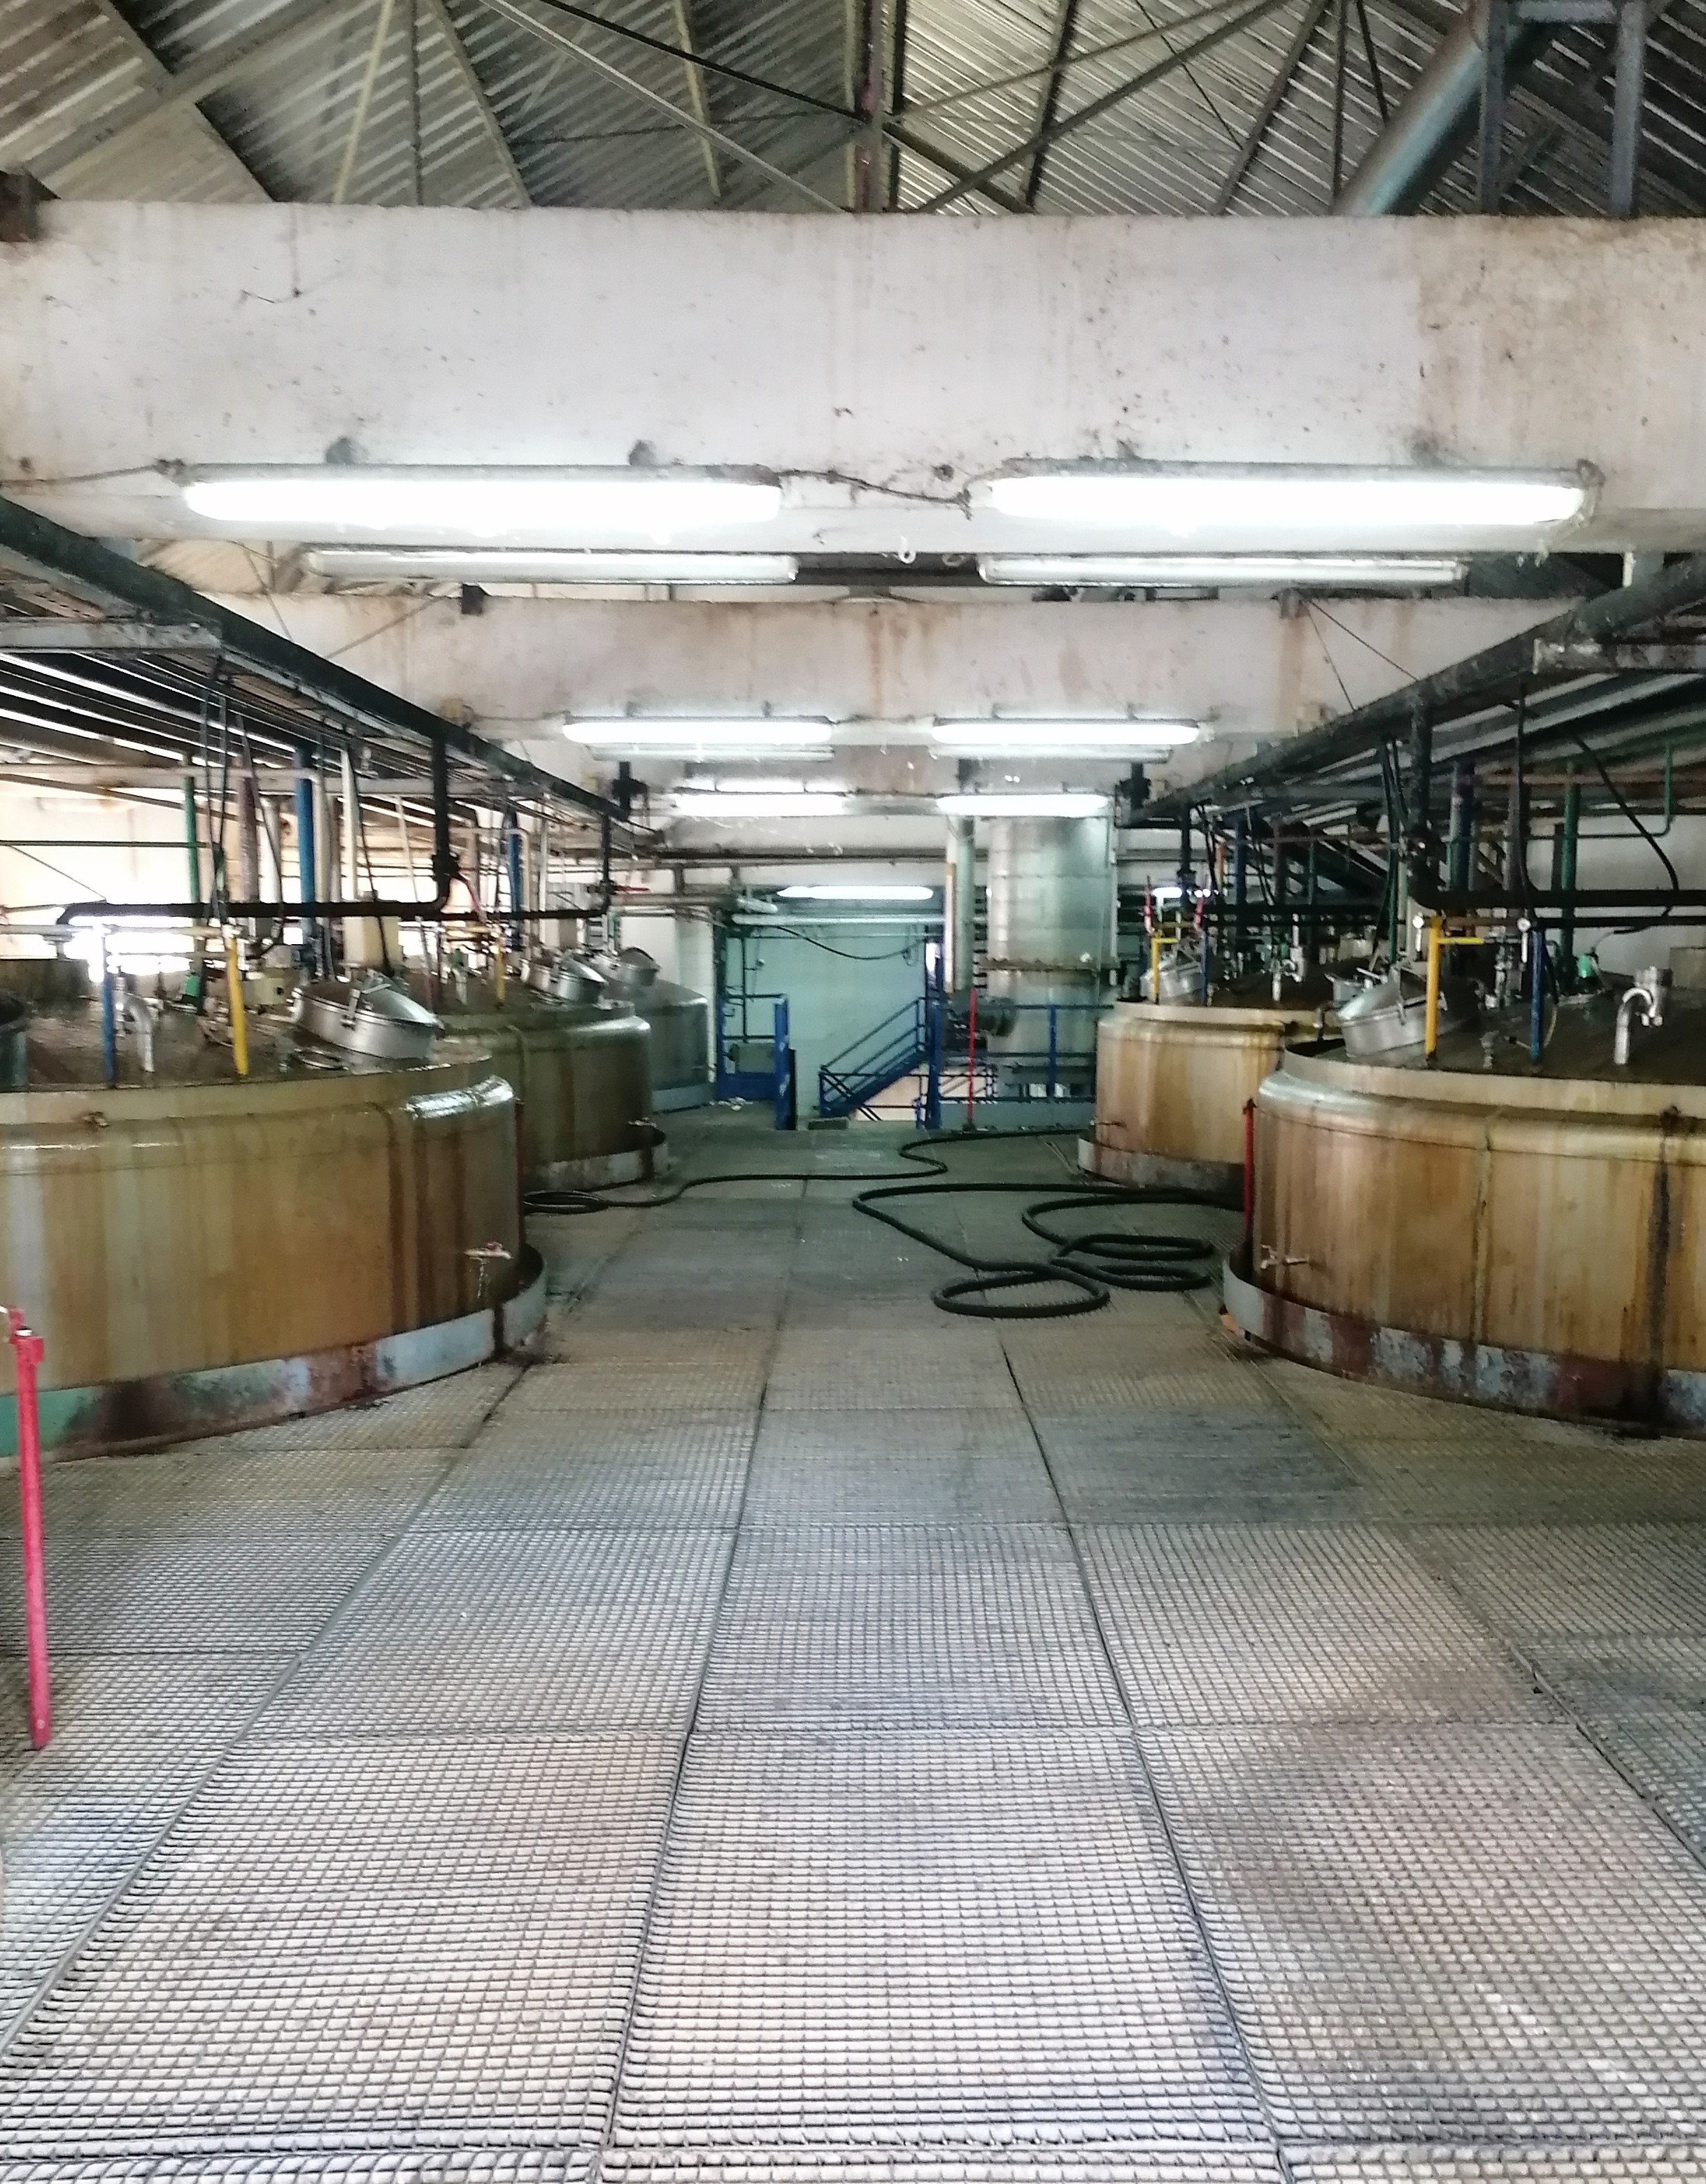 fabrika-alkohola-postrojenje-pan-alko-sistem-5